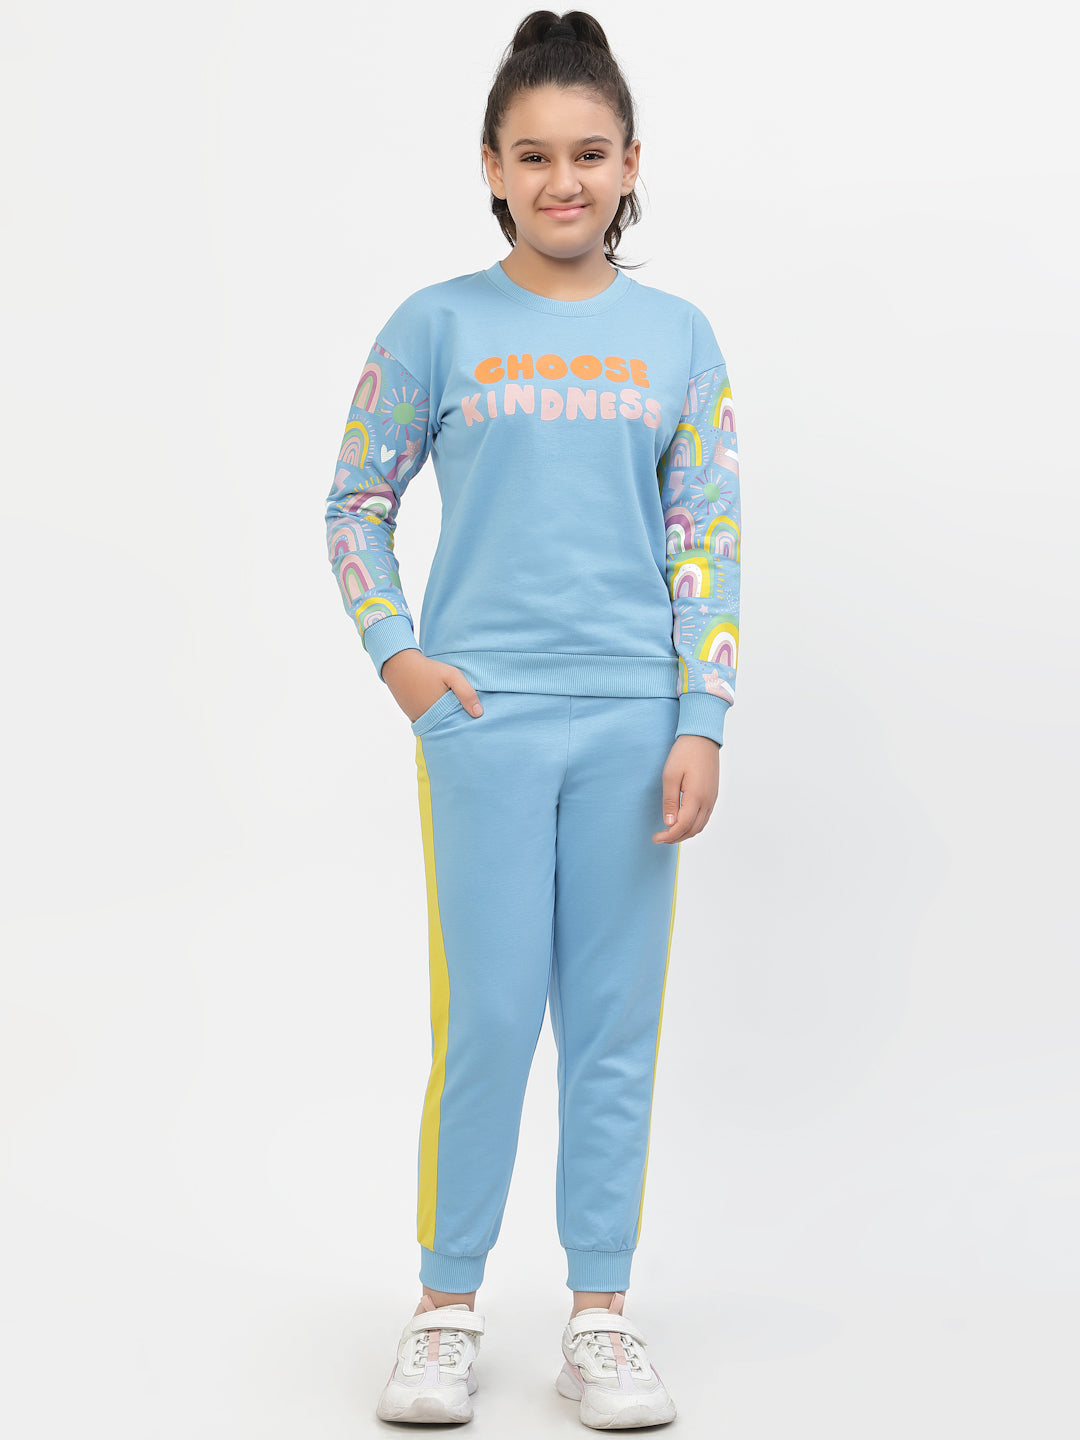 Spunkies-Girls-Kindness-Organic-Cotton-Sweatshirt & Joggers-Sets-Blue